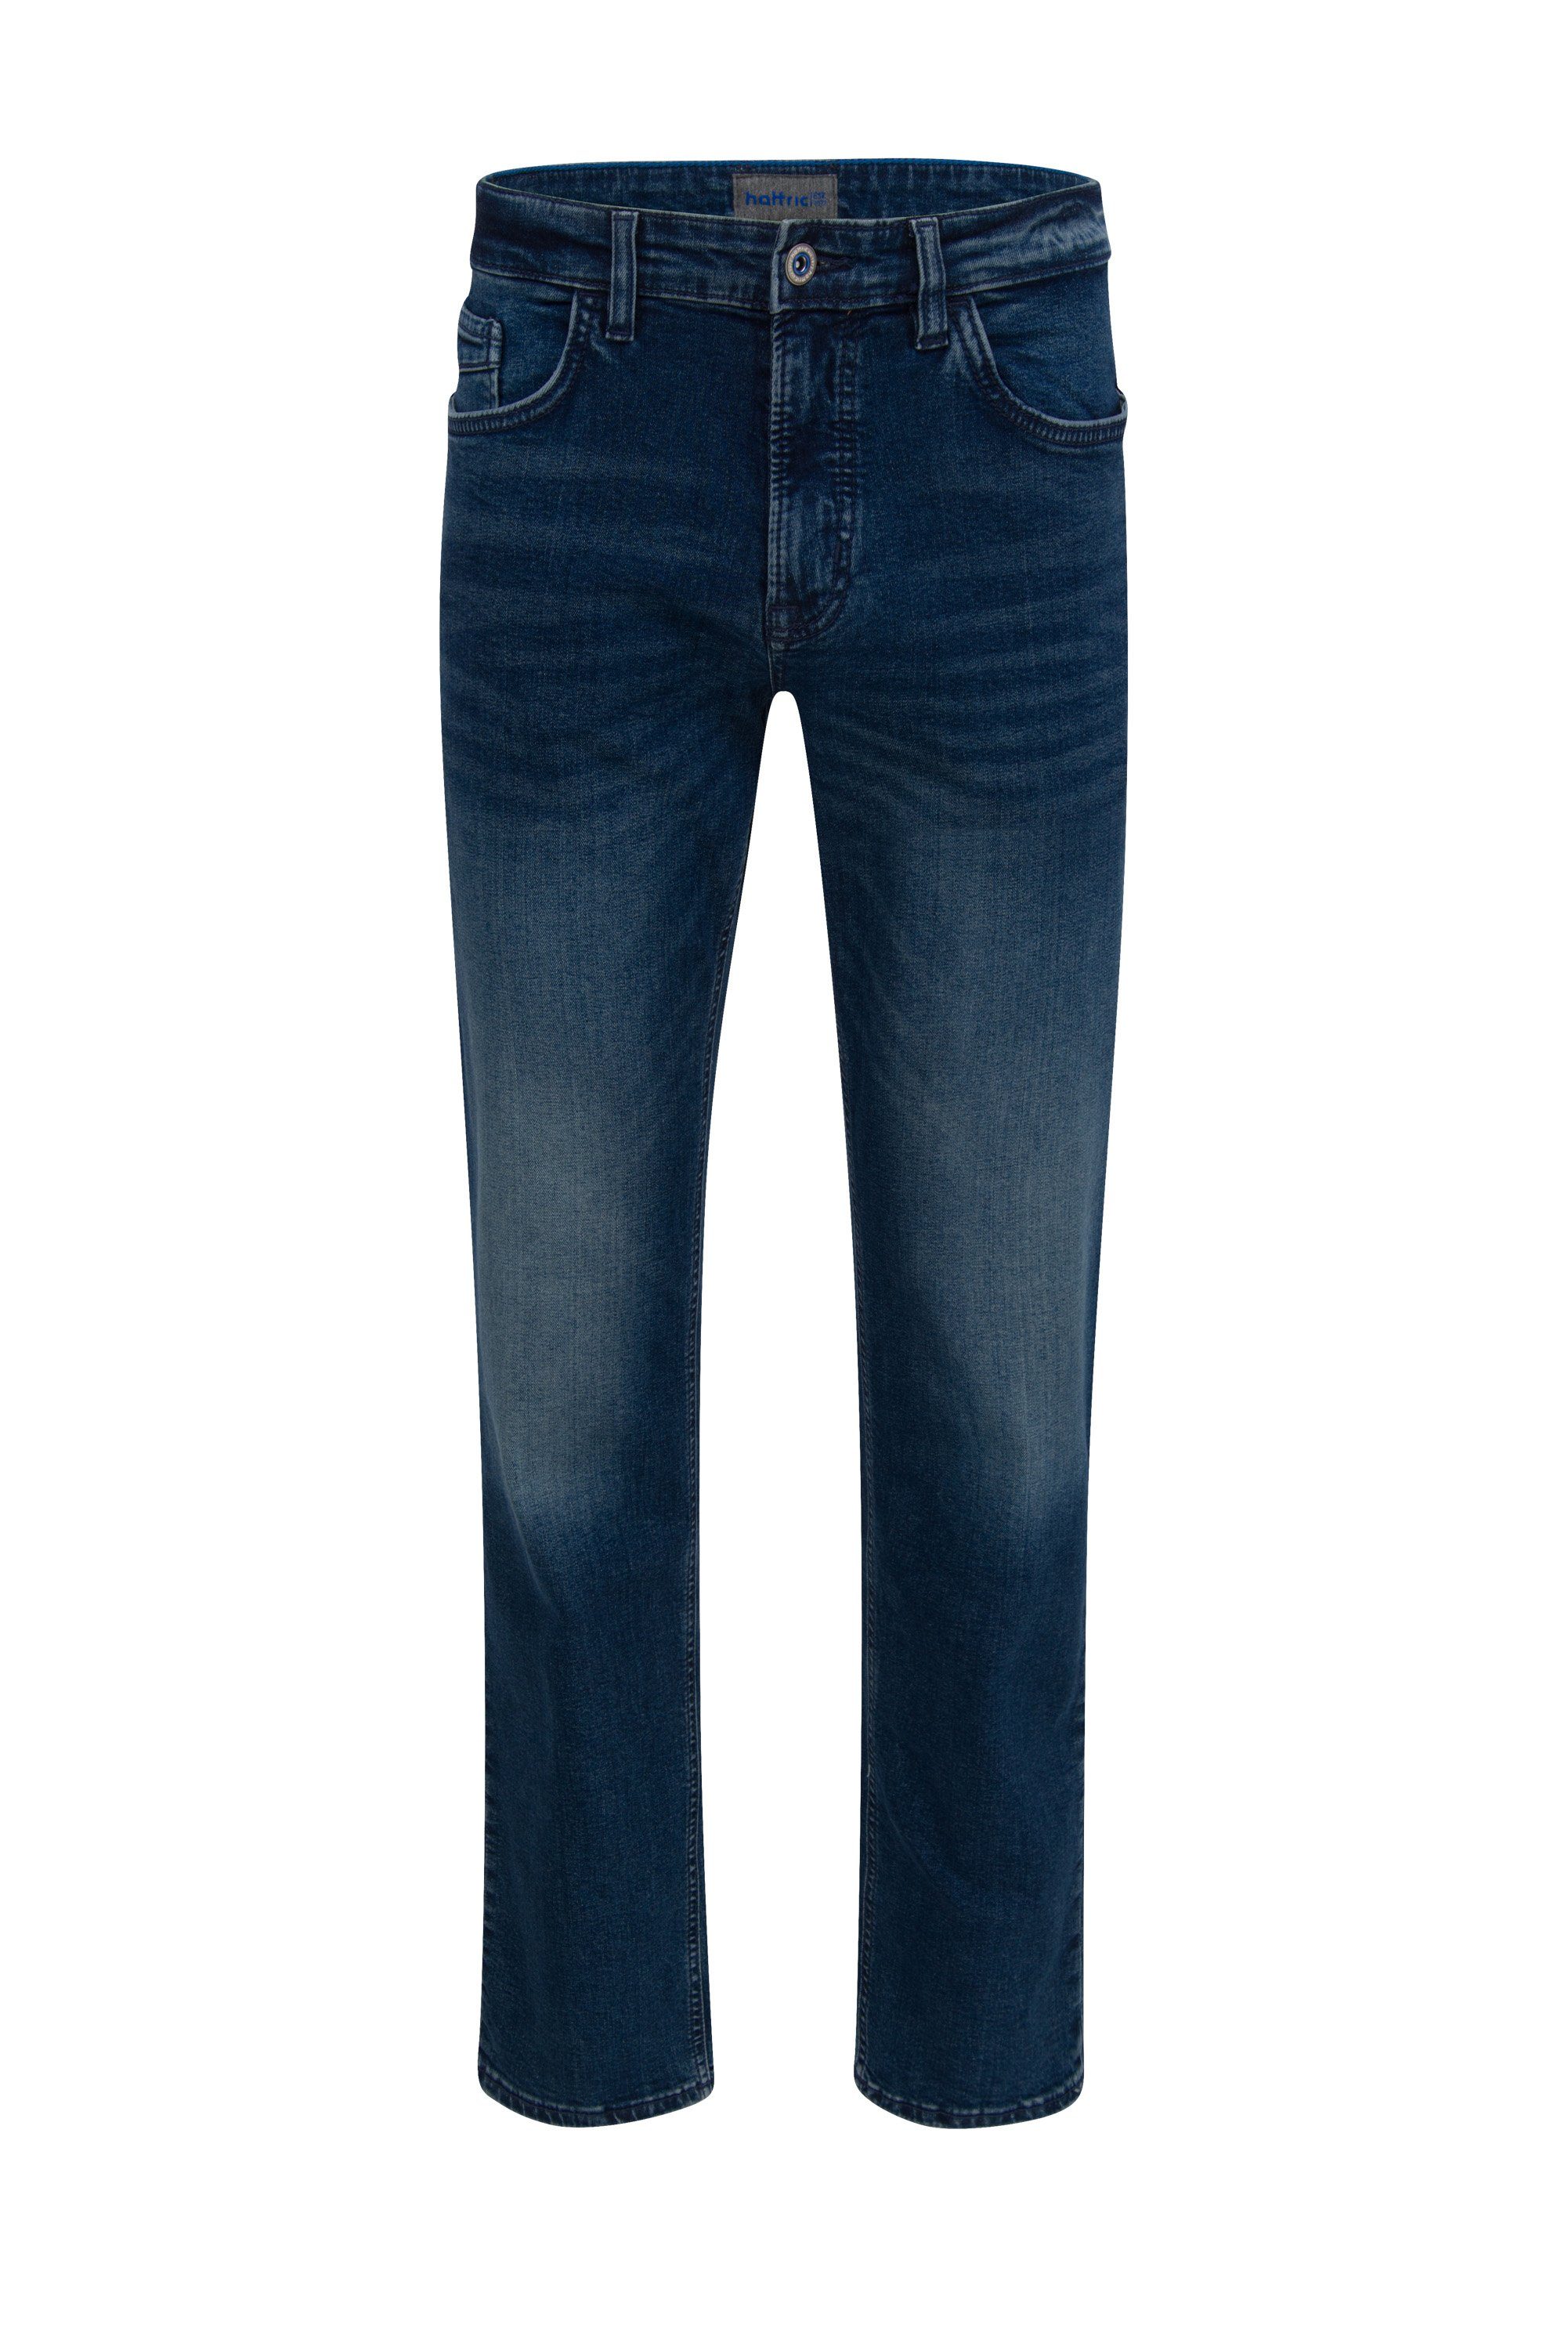 Hattric 5-Pocket-Jeans 6350.48 blue HUNTER HIGH-STRETCH 688465 HATTRIC dark stone 